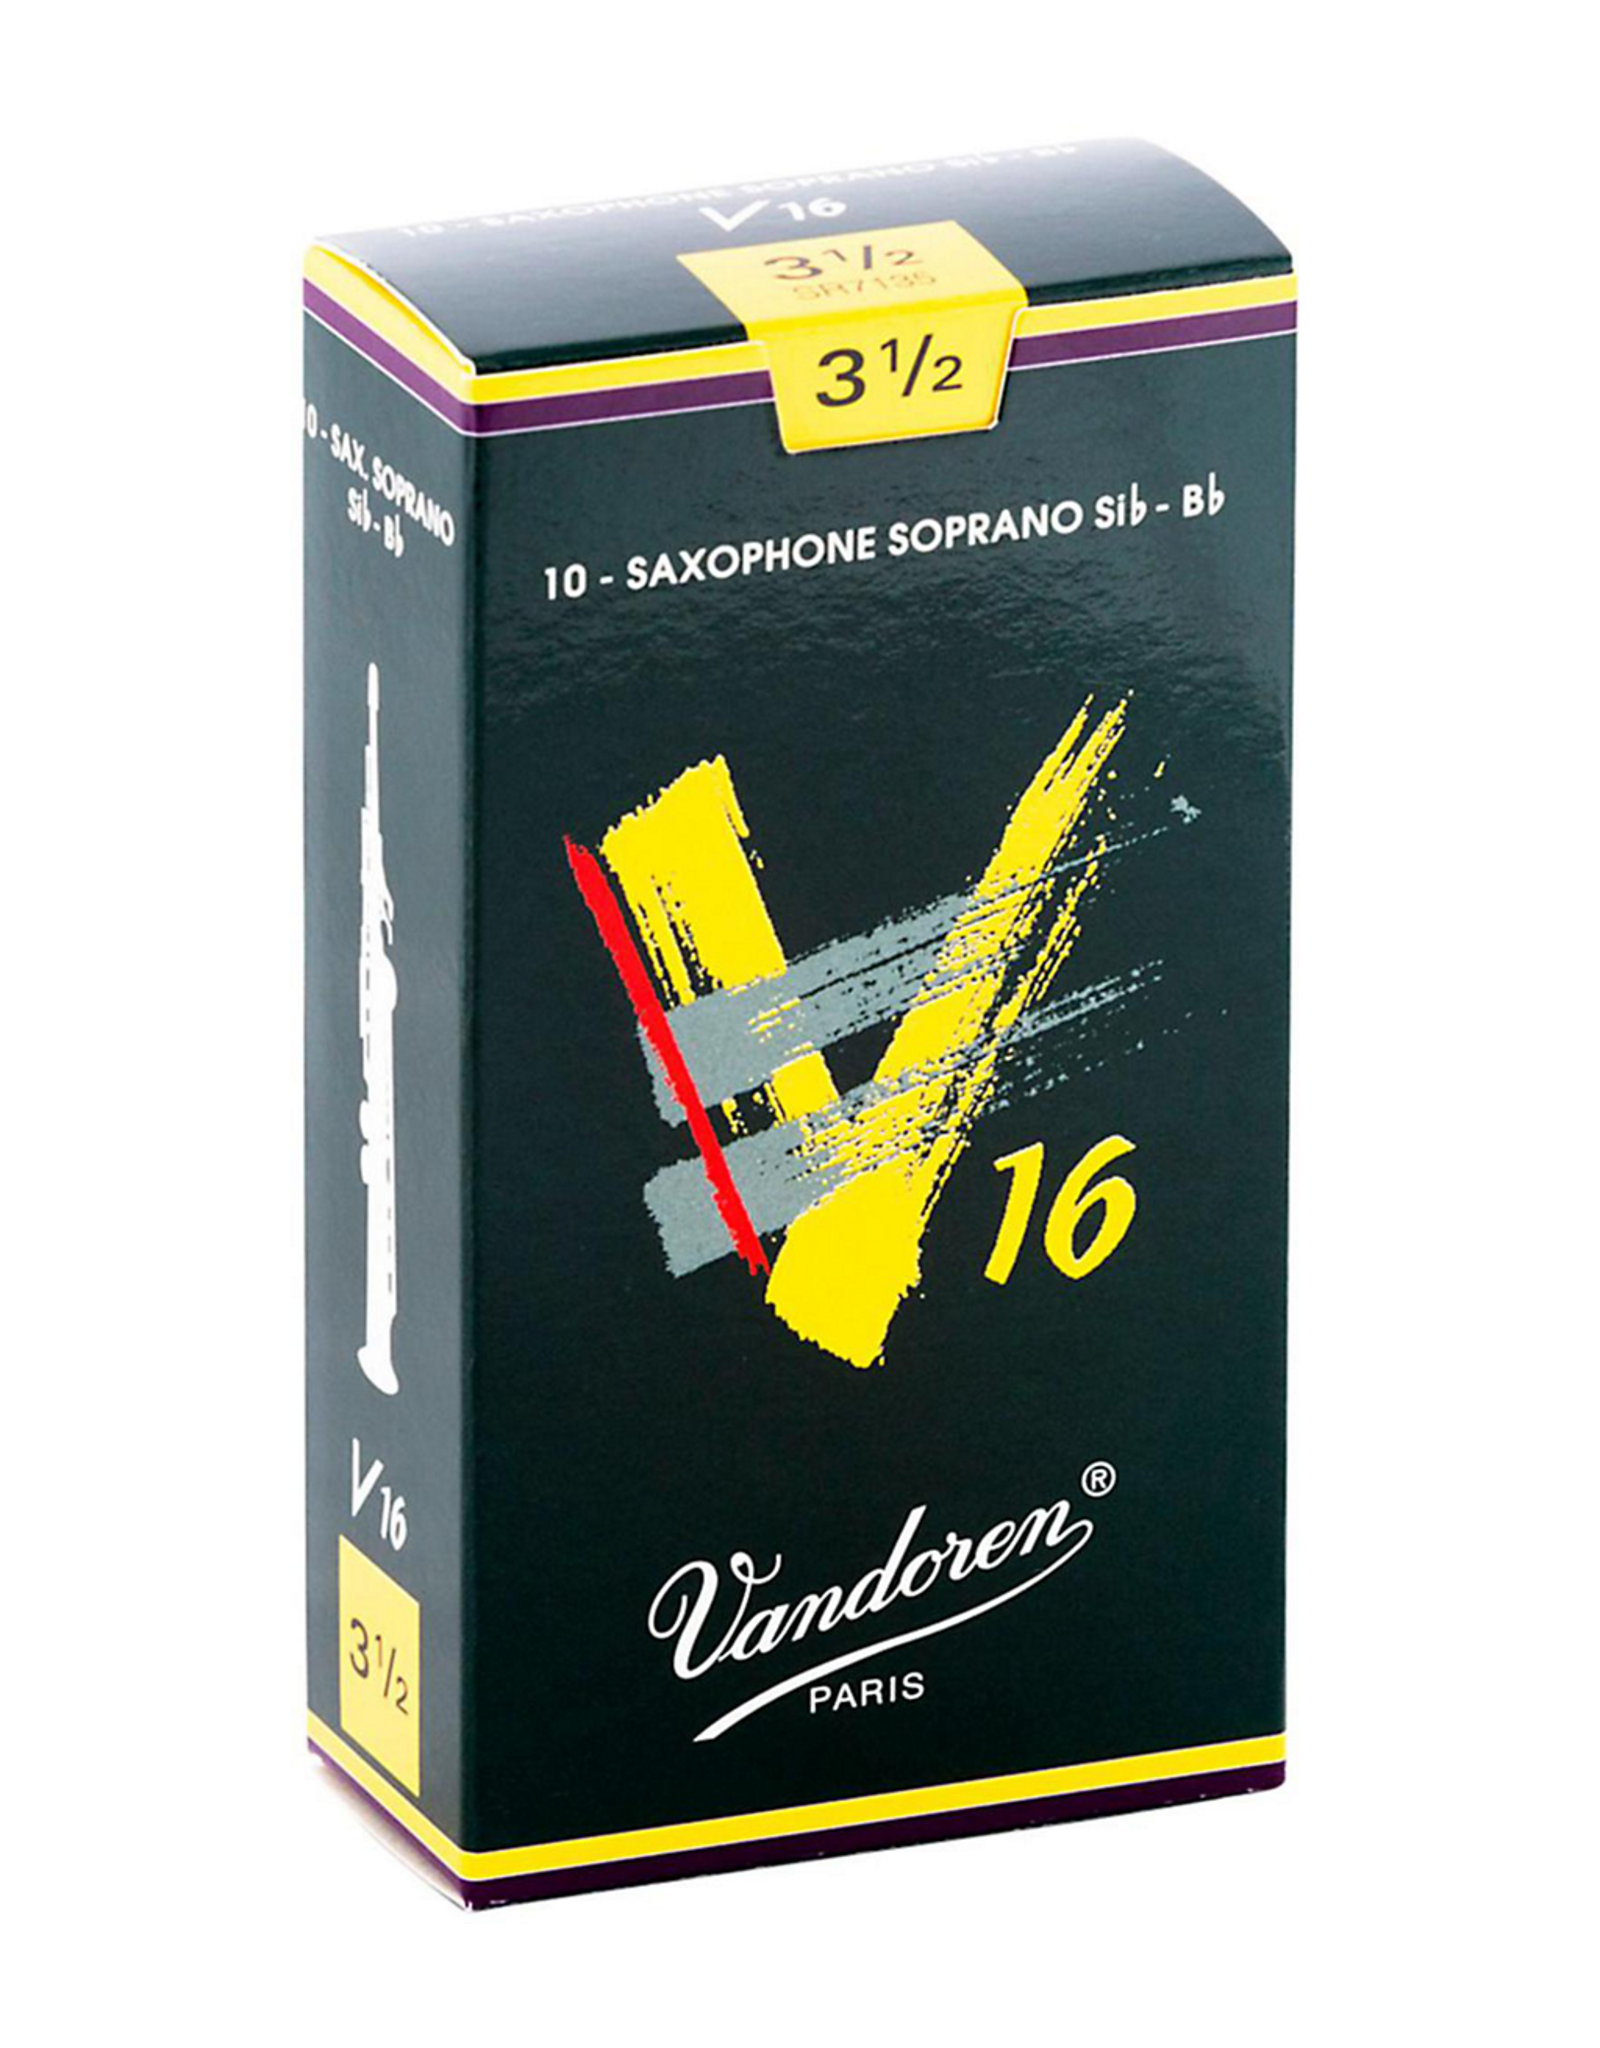 Vandoren Vandoren Soprano Sax V16 Reed Box of 10;